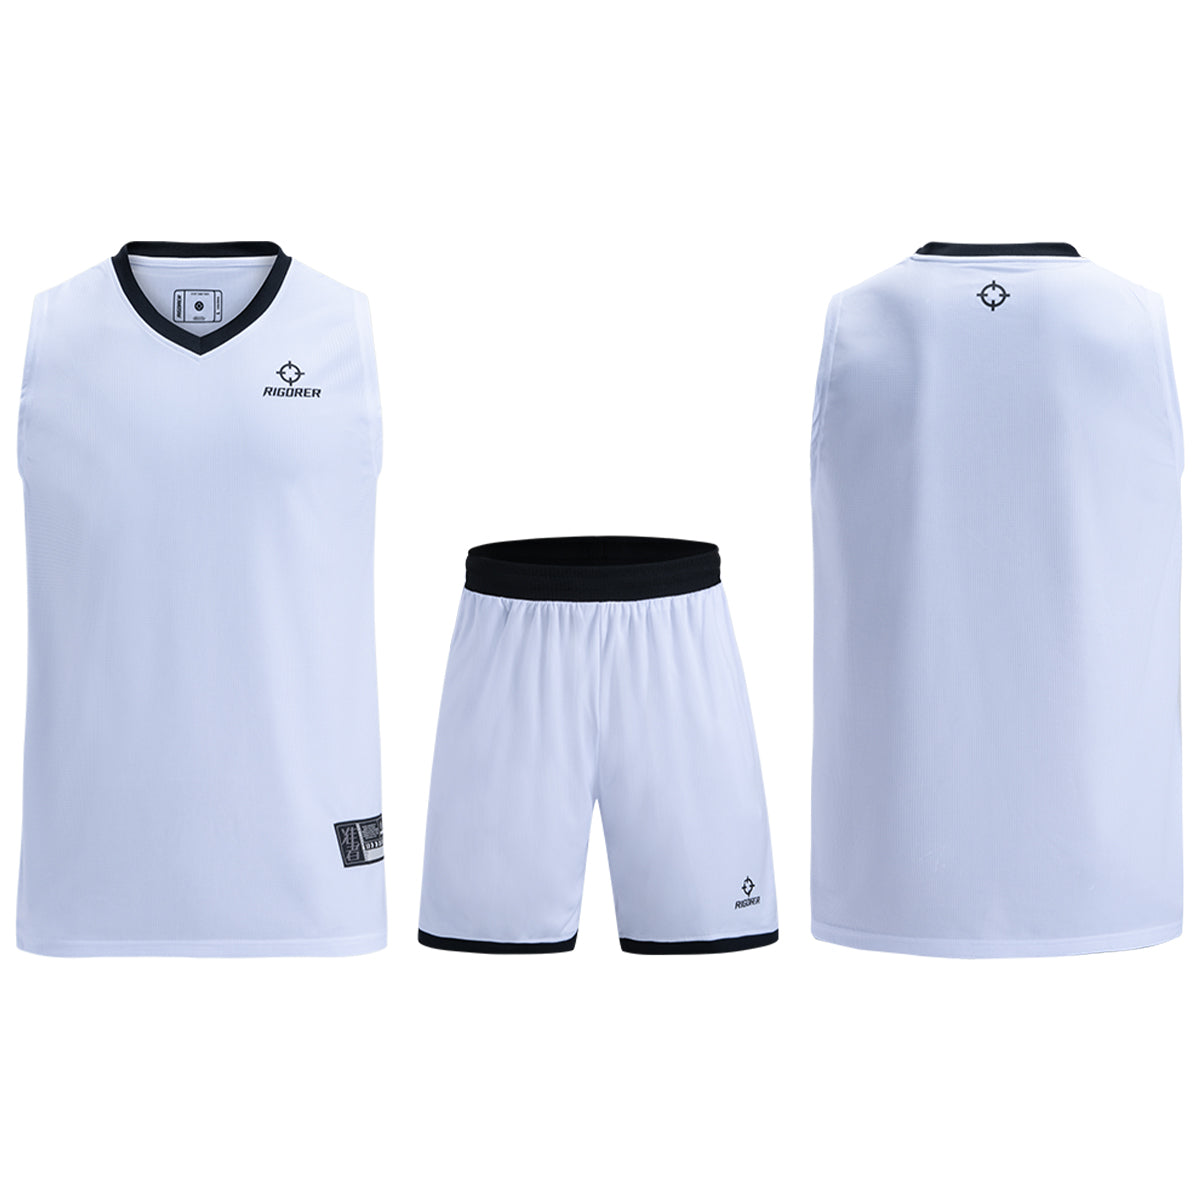 basketball jersey design plain white